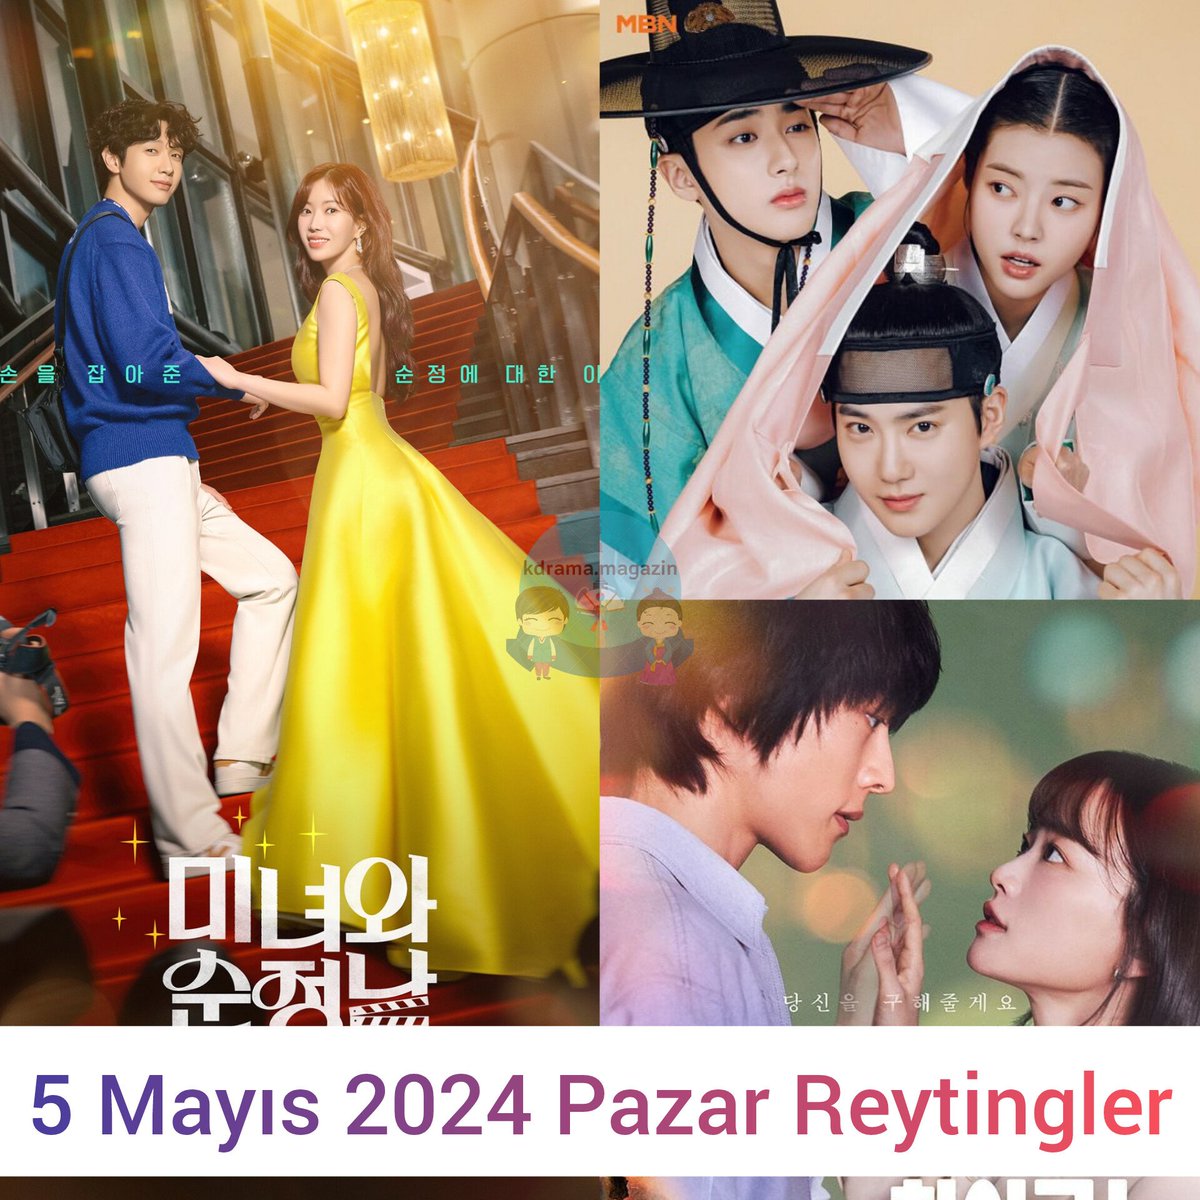 5 Mayıs 2024 Pazar reytingler: KBS2 #BeautyAndMrRomantic 15.6% MBN #MissingCrownPrince 3.6% jtbc #TheAtypicalFamily 3% 👉 #kdramamagazinreytingler